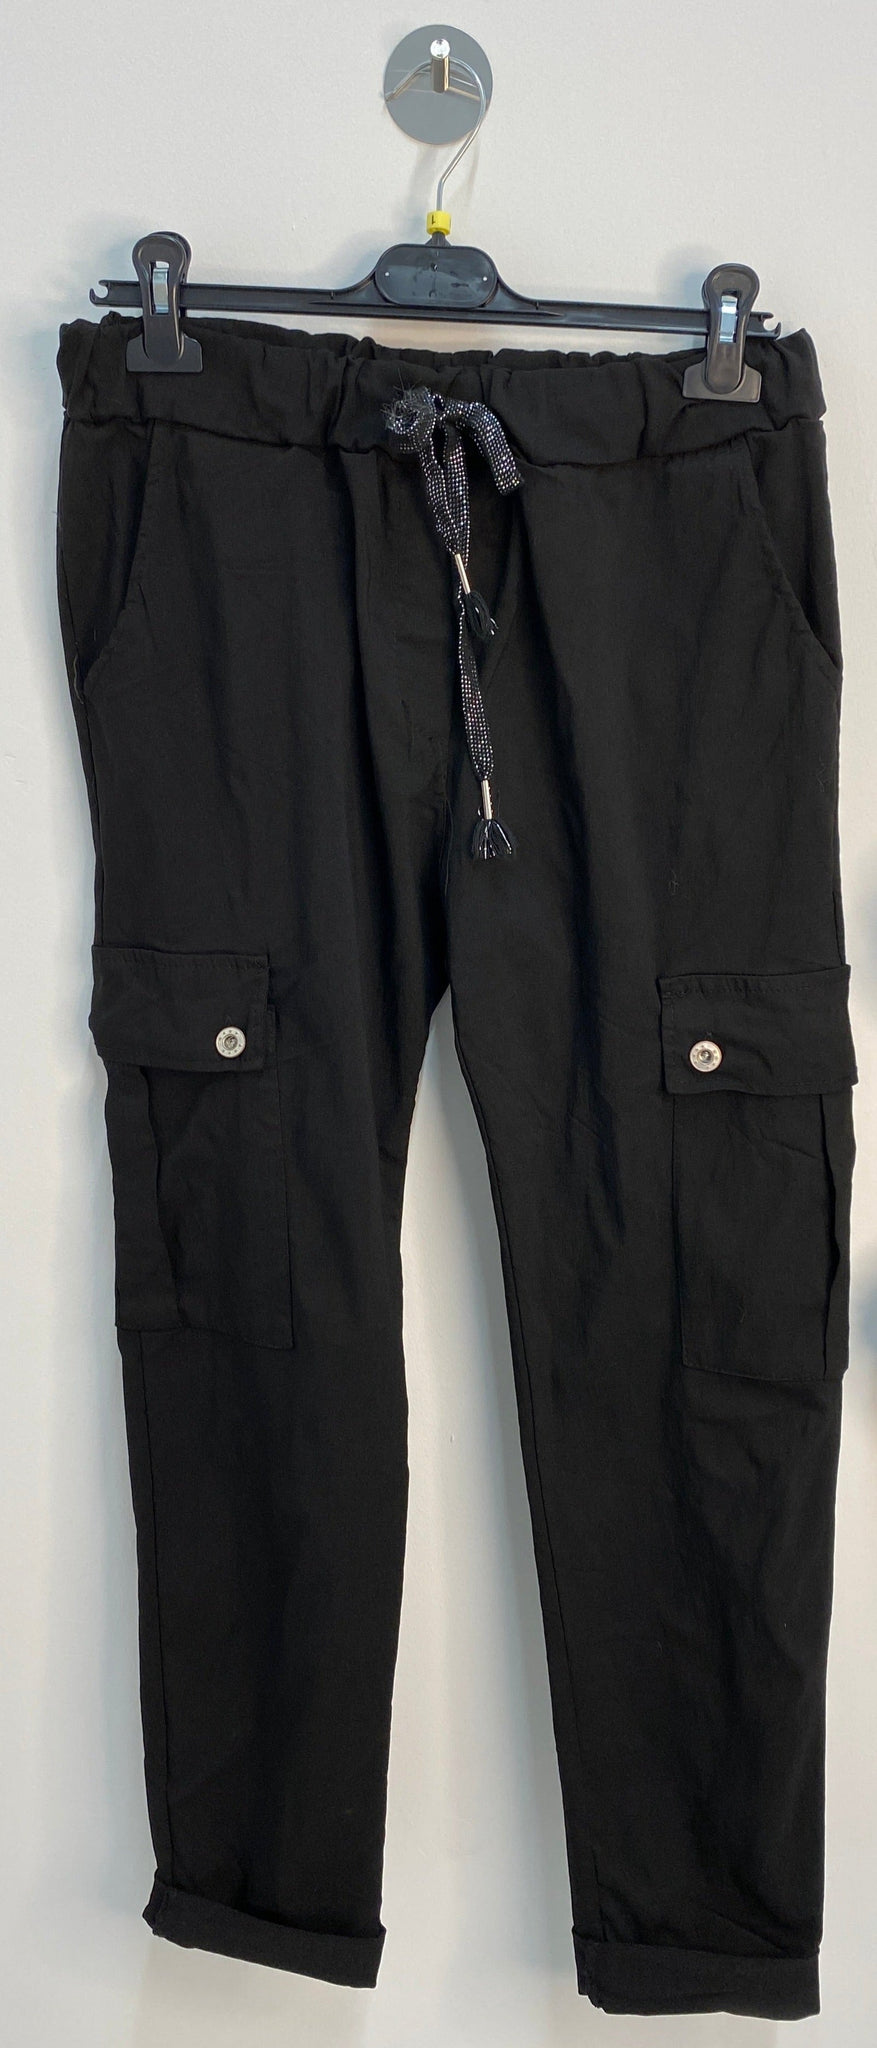 Lisbon Cargo Magic Pants - Black (2 Sizes)